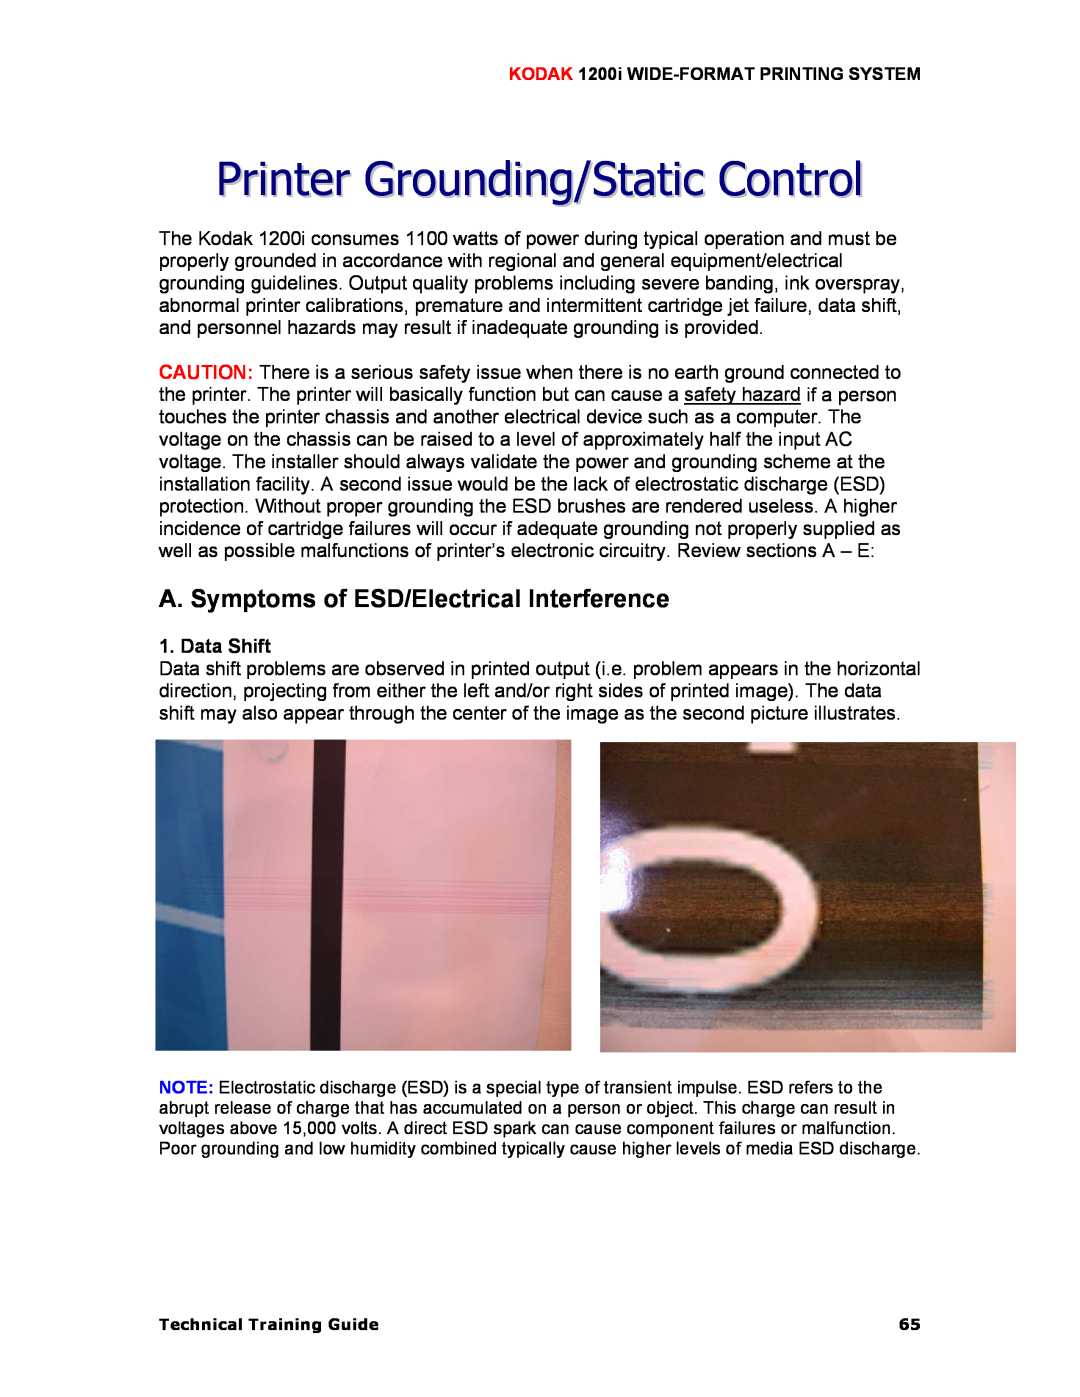 Kodak 1200I manual Printer Grounding/Static Control, A. Symptoms of ESD/Electrical Interference 